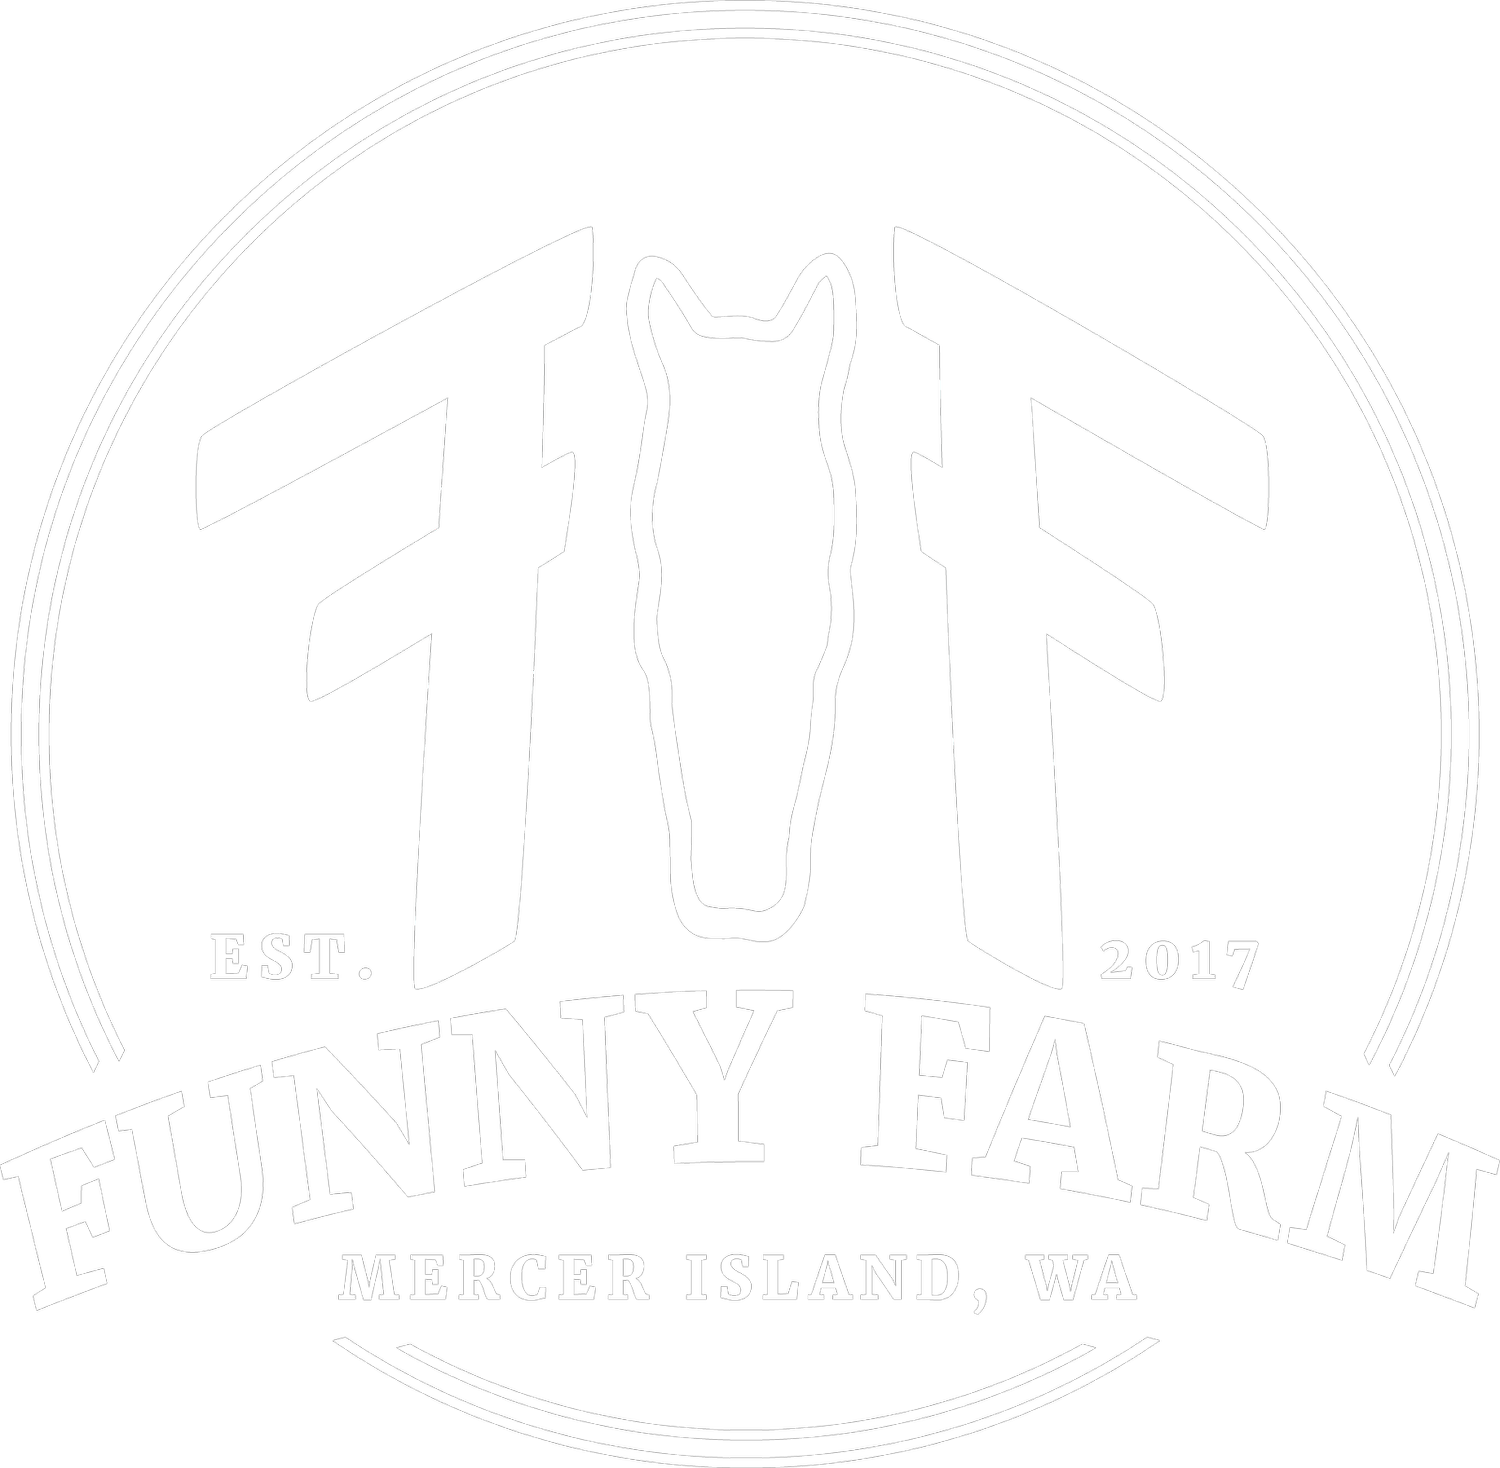 Mi Funny Farm